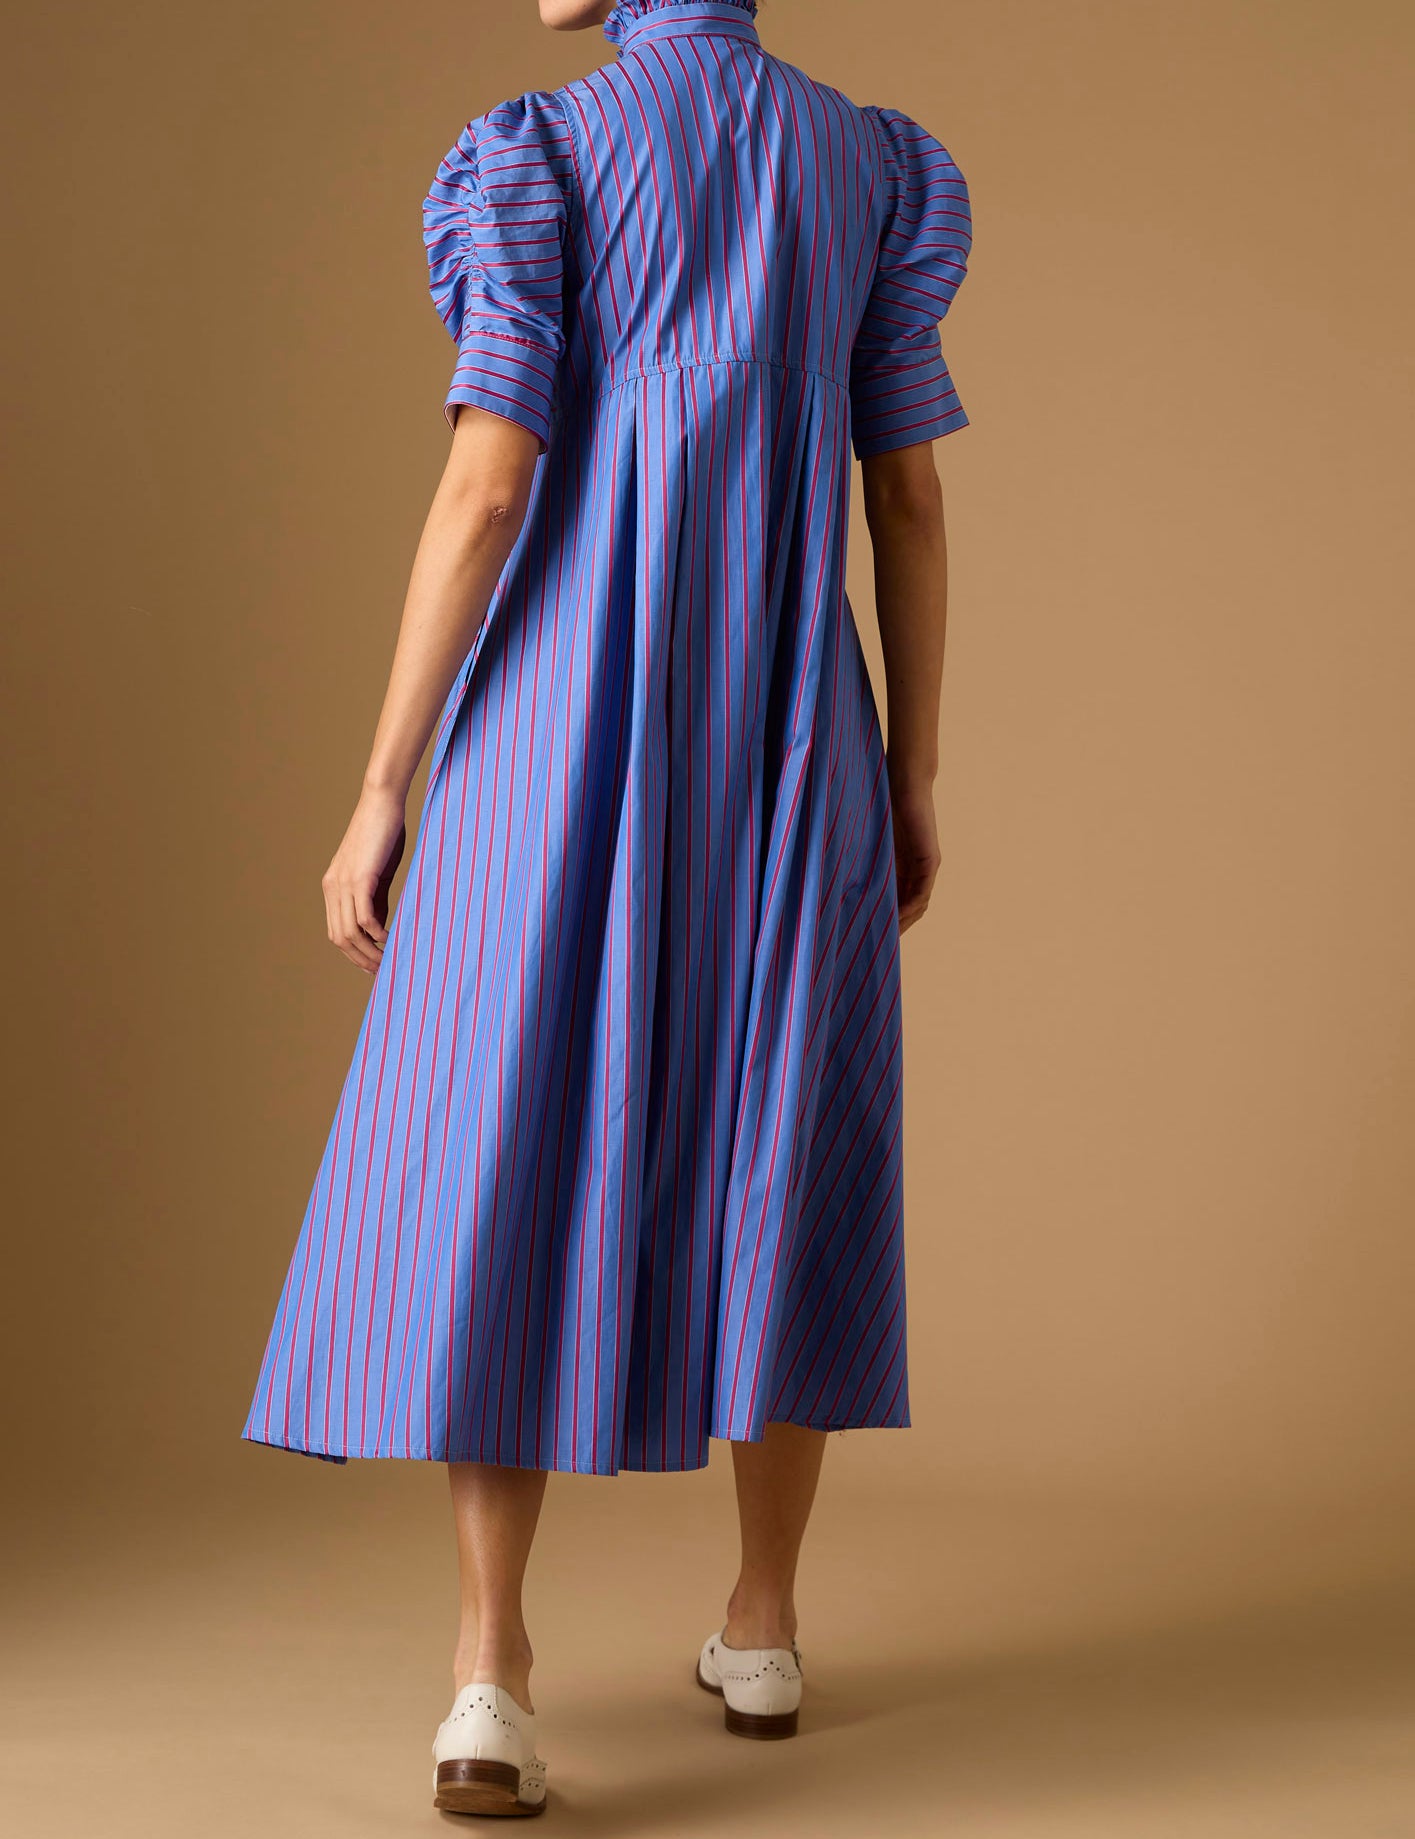 Back view of Venetia Bluet Cherry Stripes Dress by Thierry Colson